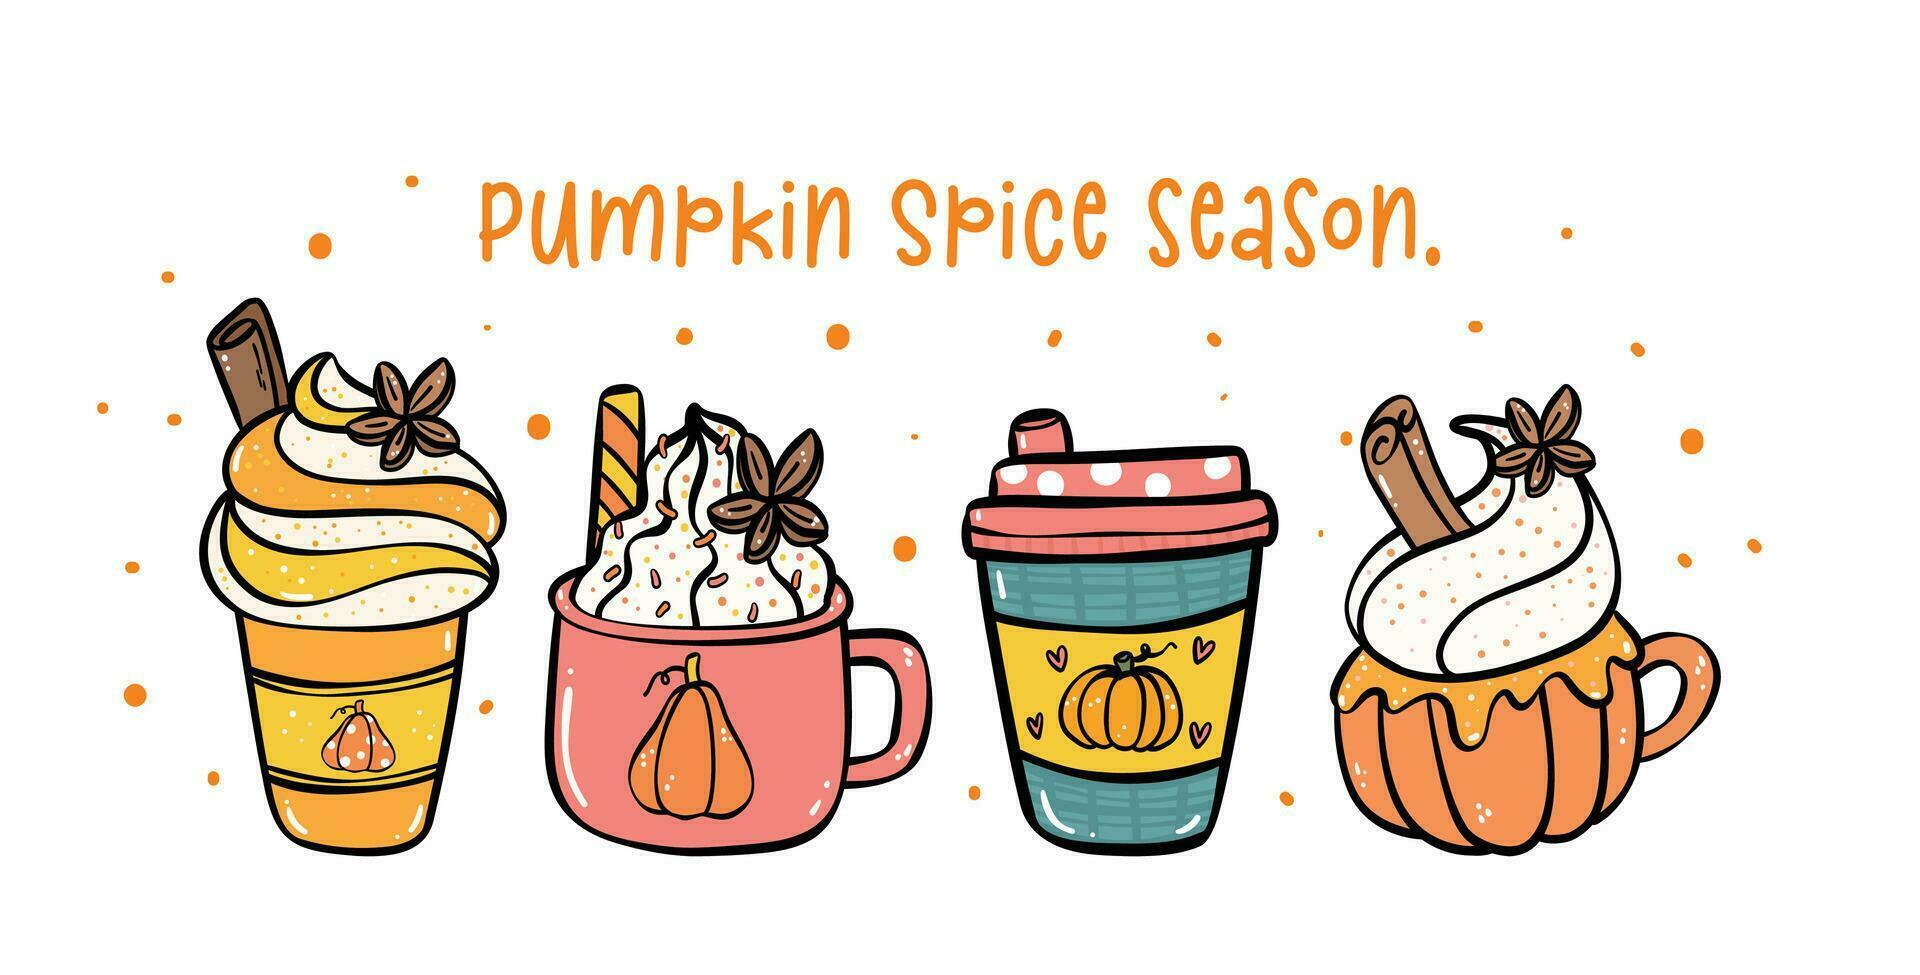 Pumpkin Spice Drink Collection Cartoon Doodles banner. vector